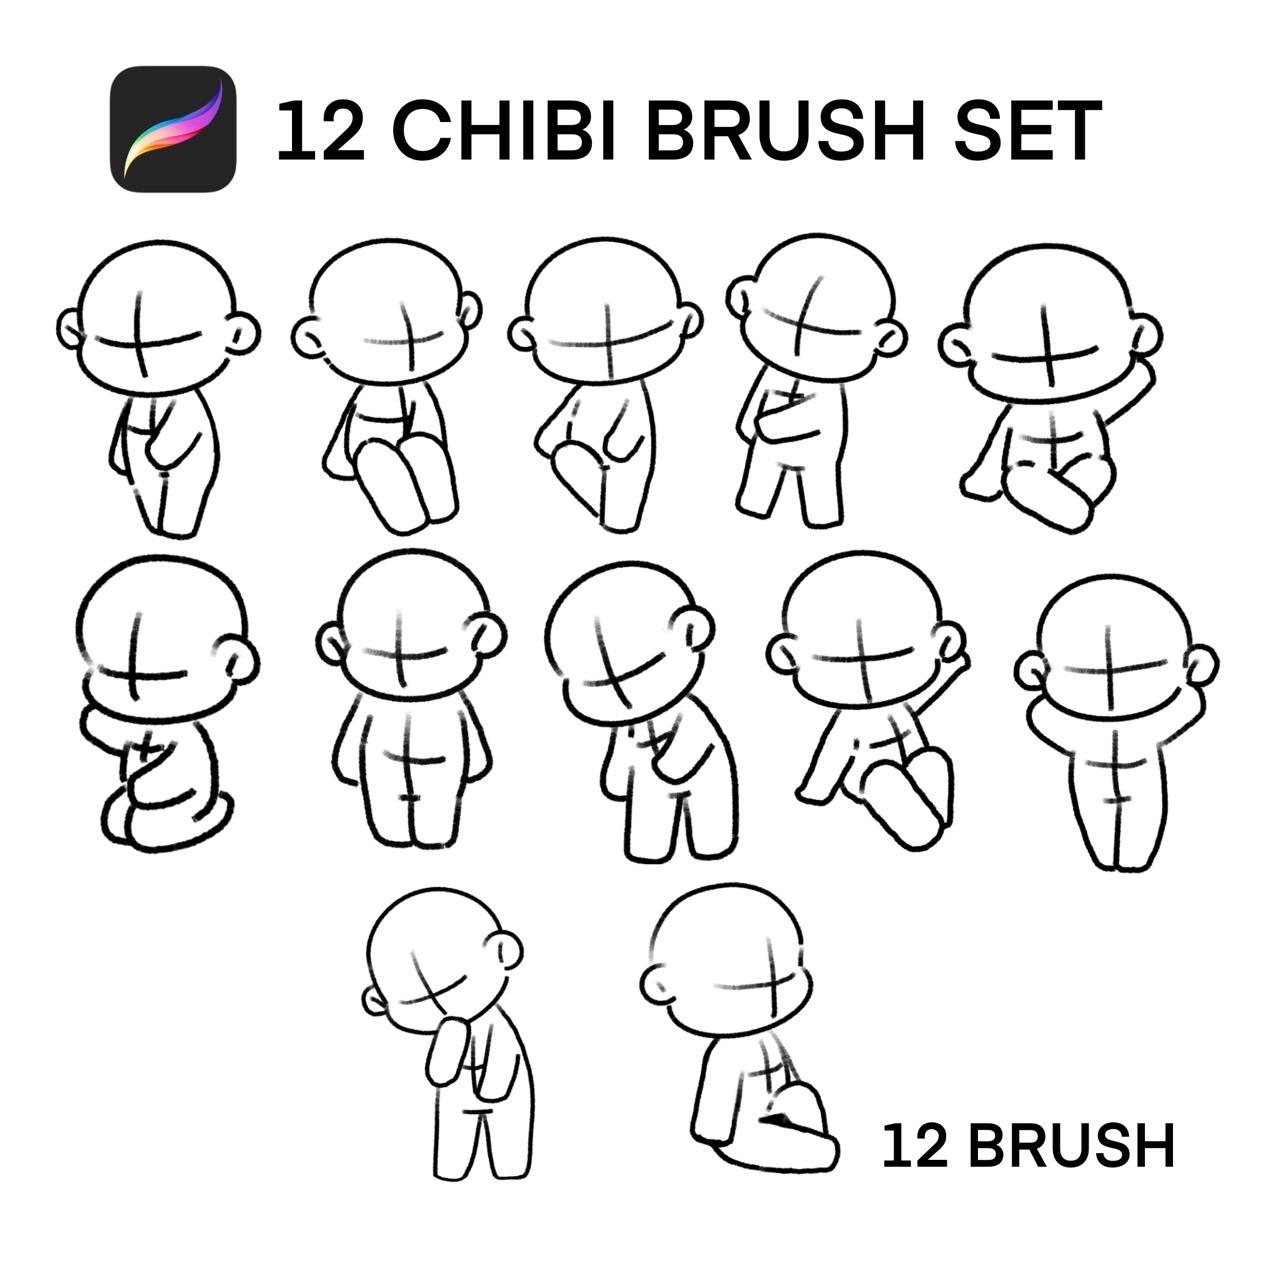 12 CHIBI BRUSH SET